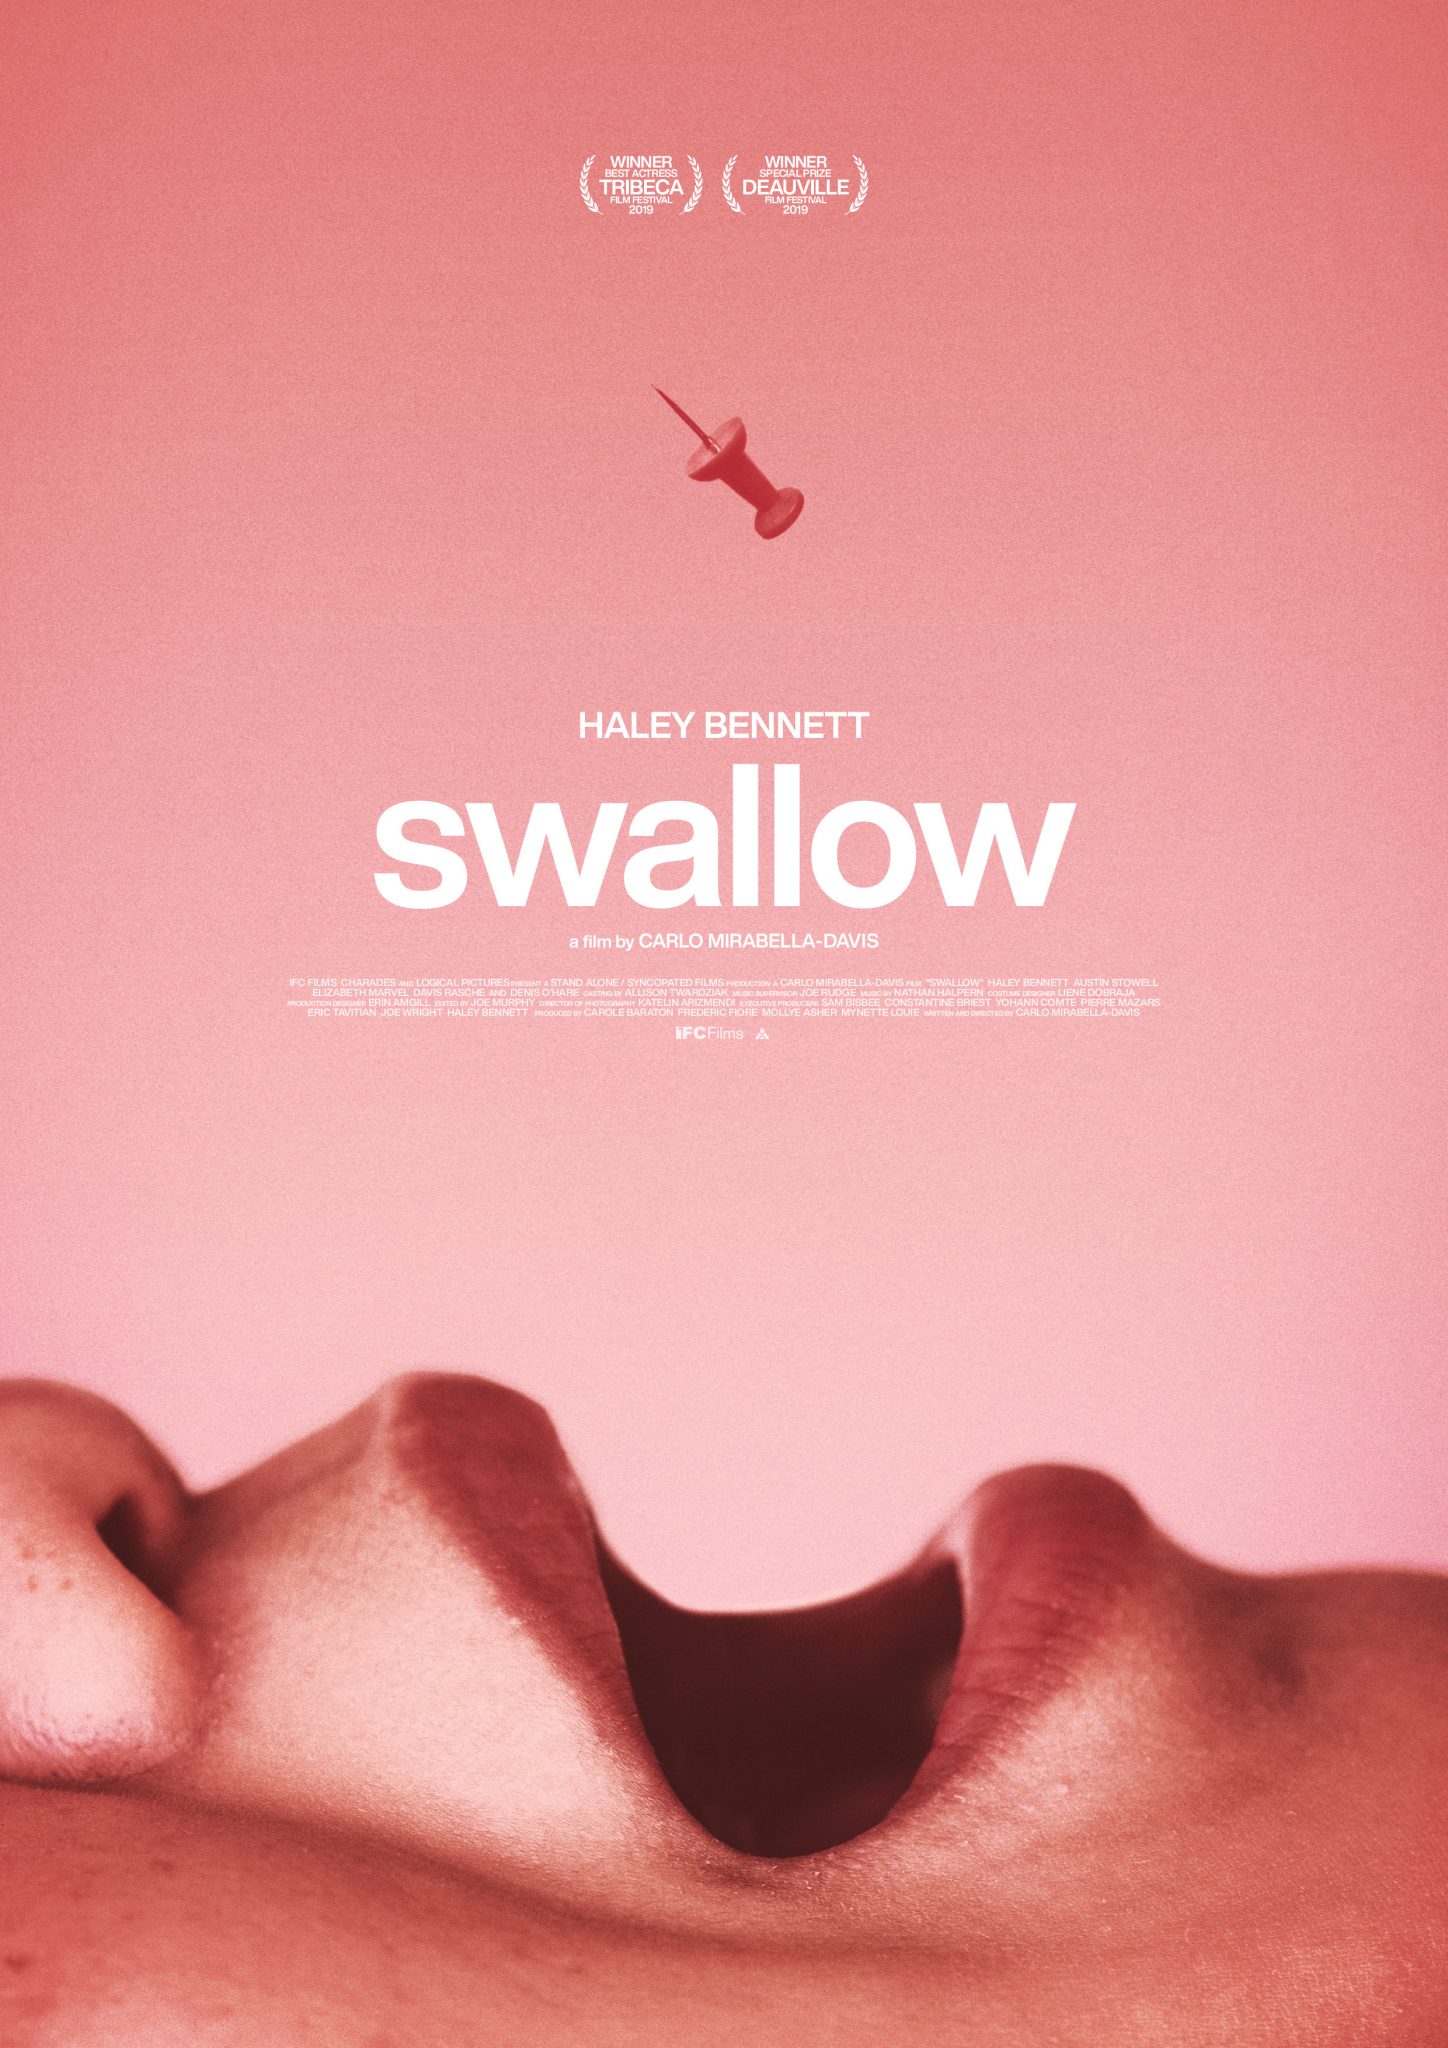 Swallow Di Carlo Mirabella Davis